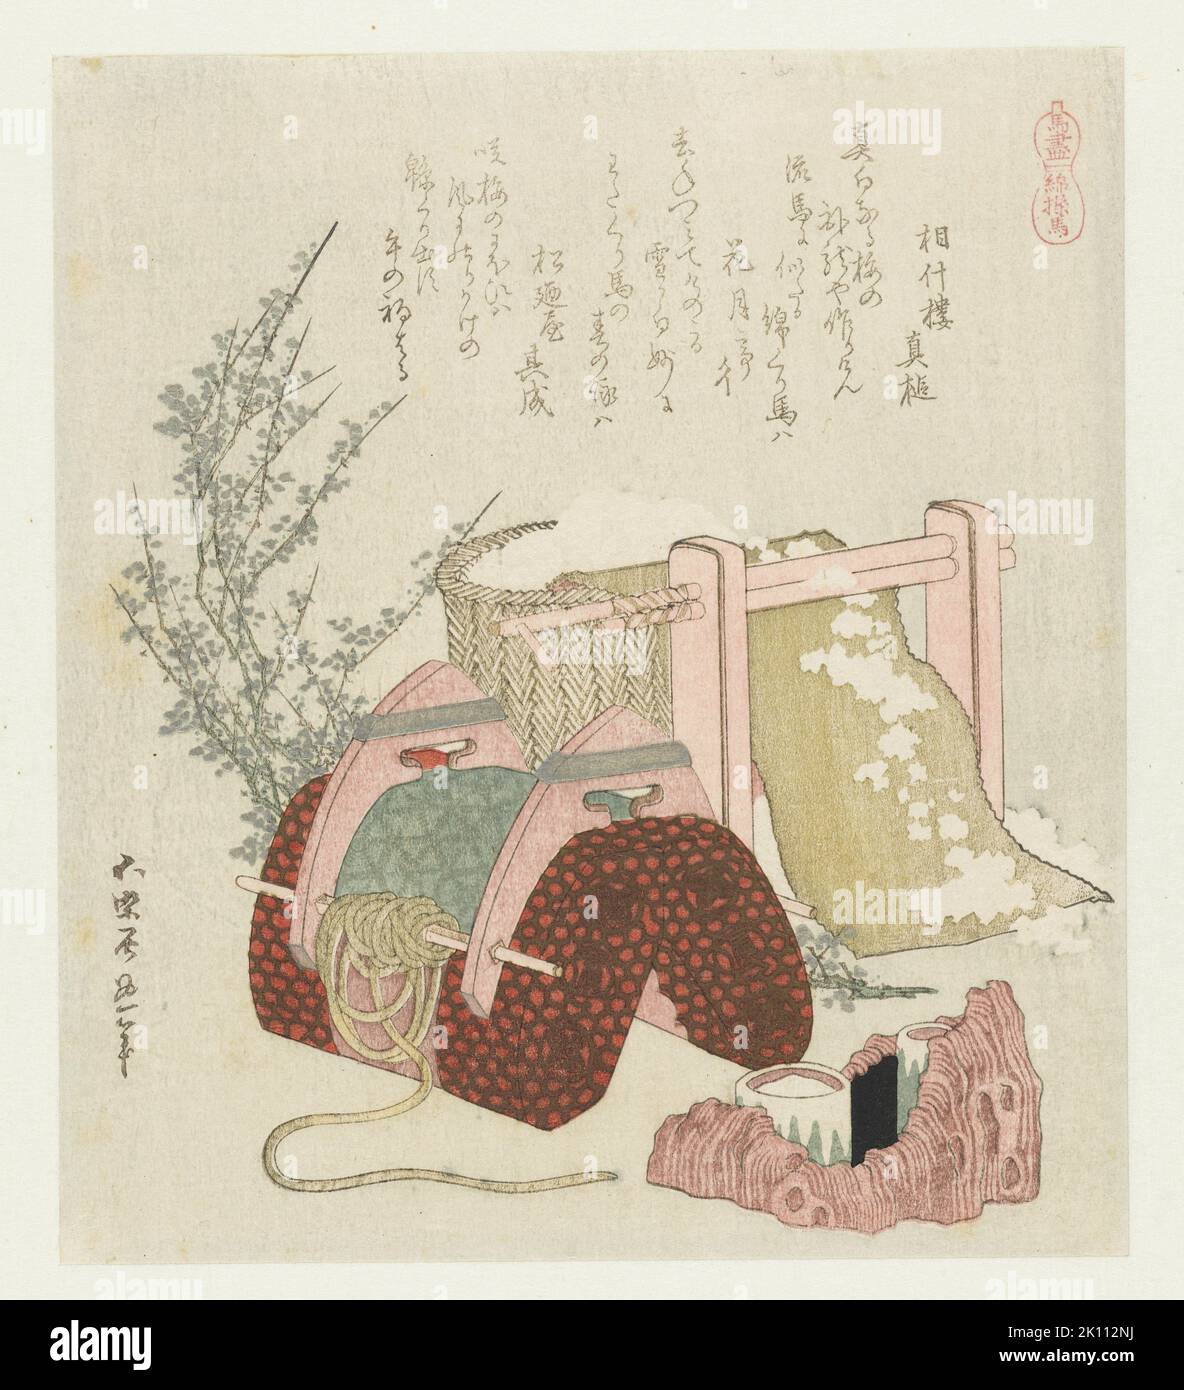 Katoenverwerker met zadel, Katsushika Hokusai, 1822 nishikie, mit metallischen Pigmenten und Blinddruck, h 207mm × w 184mm Stockfoto